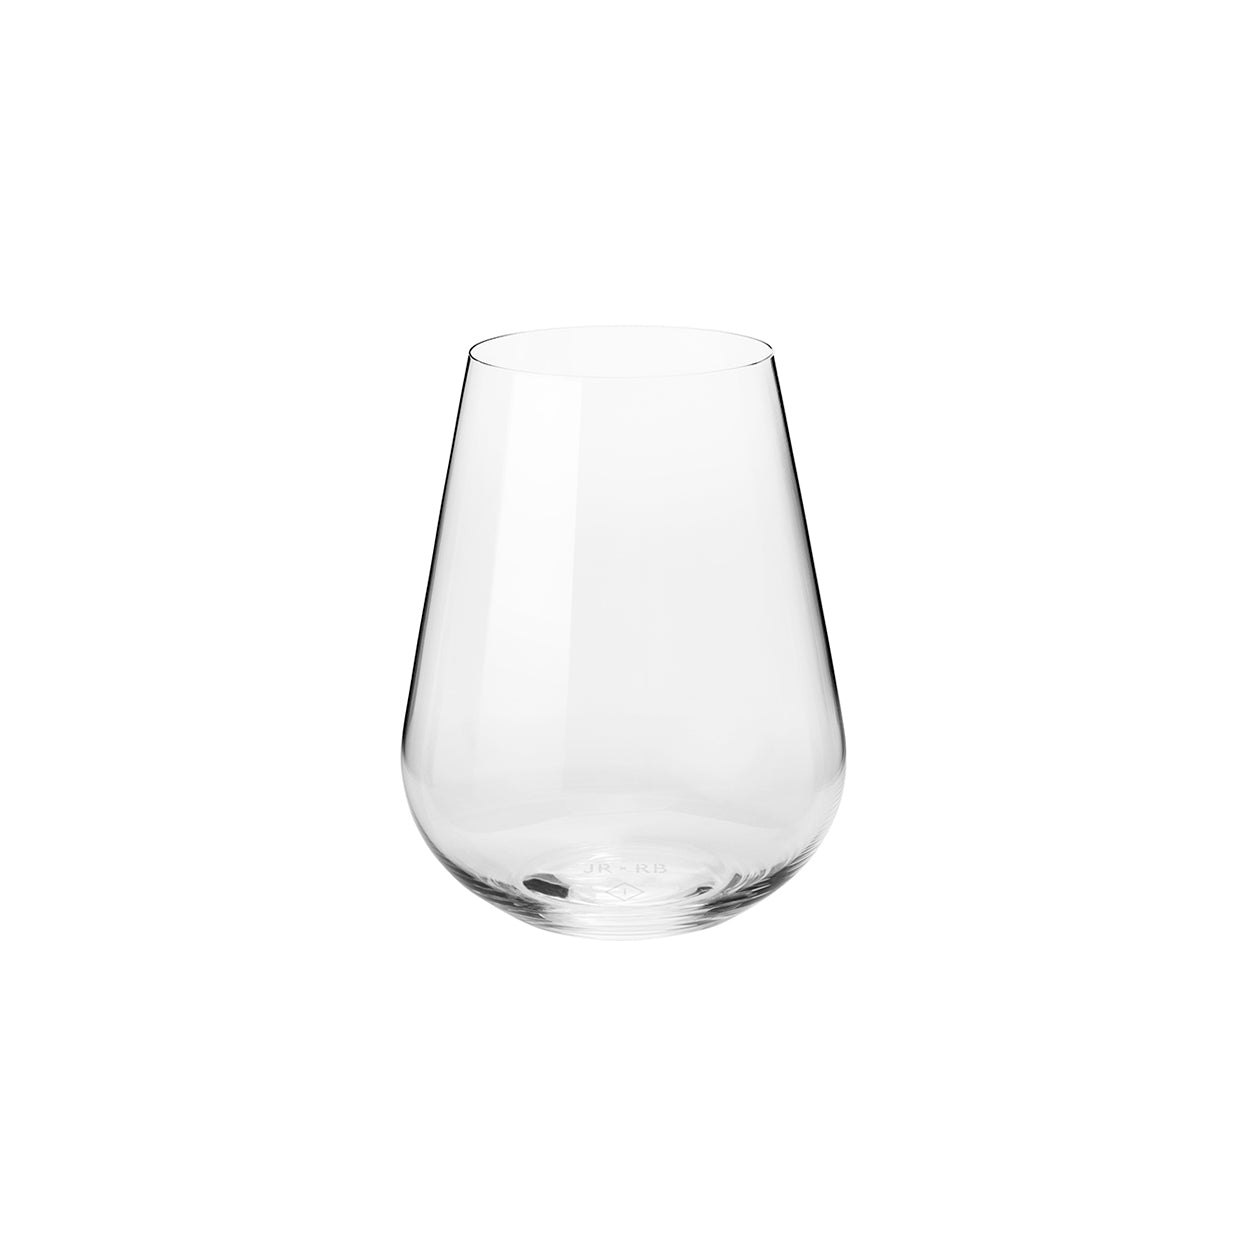 https://www.skurnik.com/wp-content/uploads/1980/06/stemless-wine-water-glass-set-of-2-jancis-robinson-x-richard-brendon.jpg